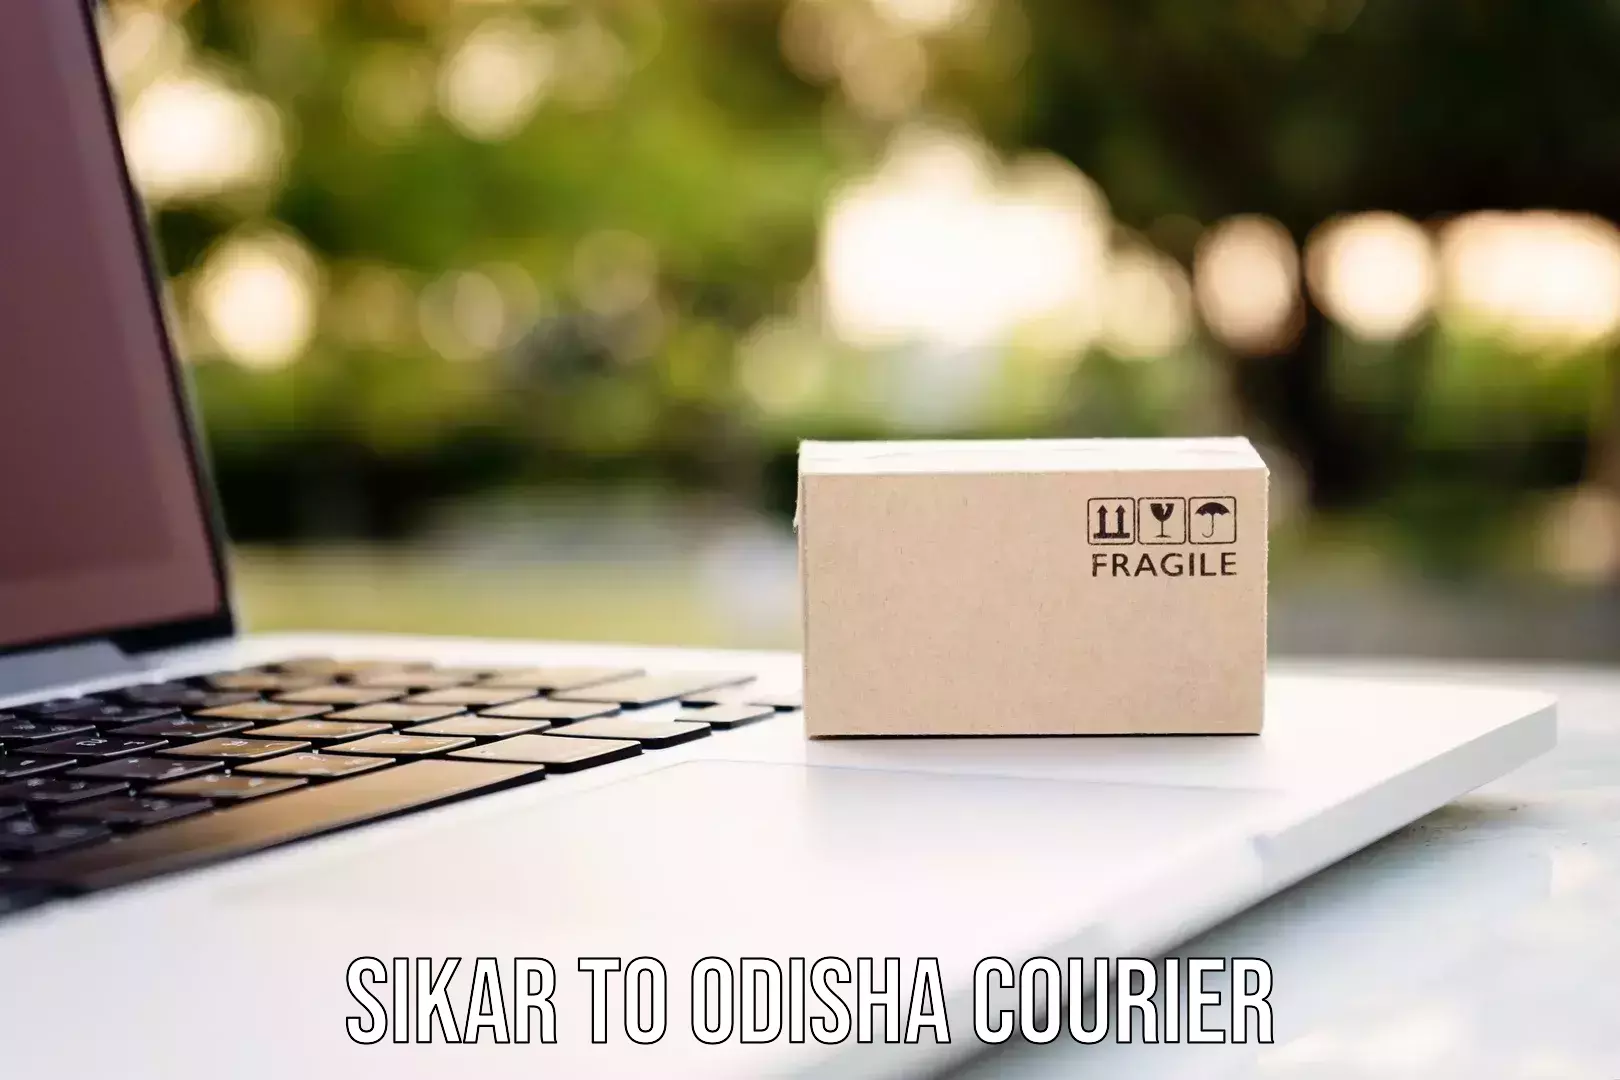 Courier service partnerships Sikar to Kodala